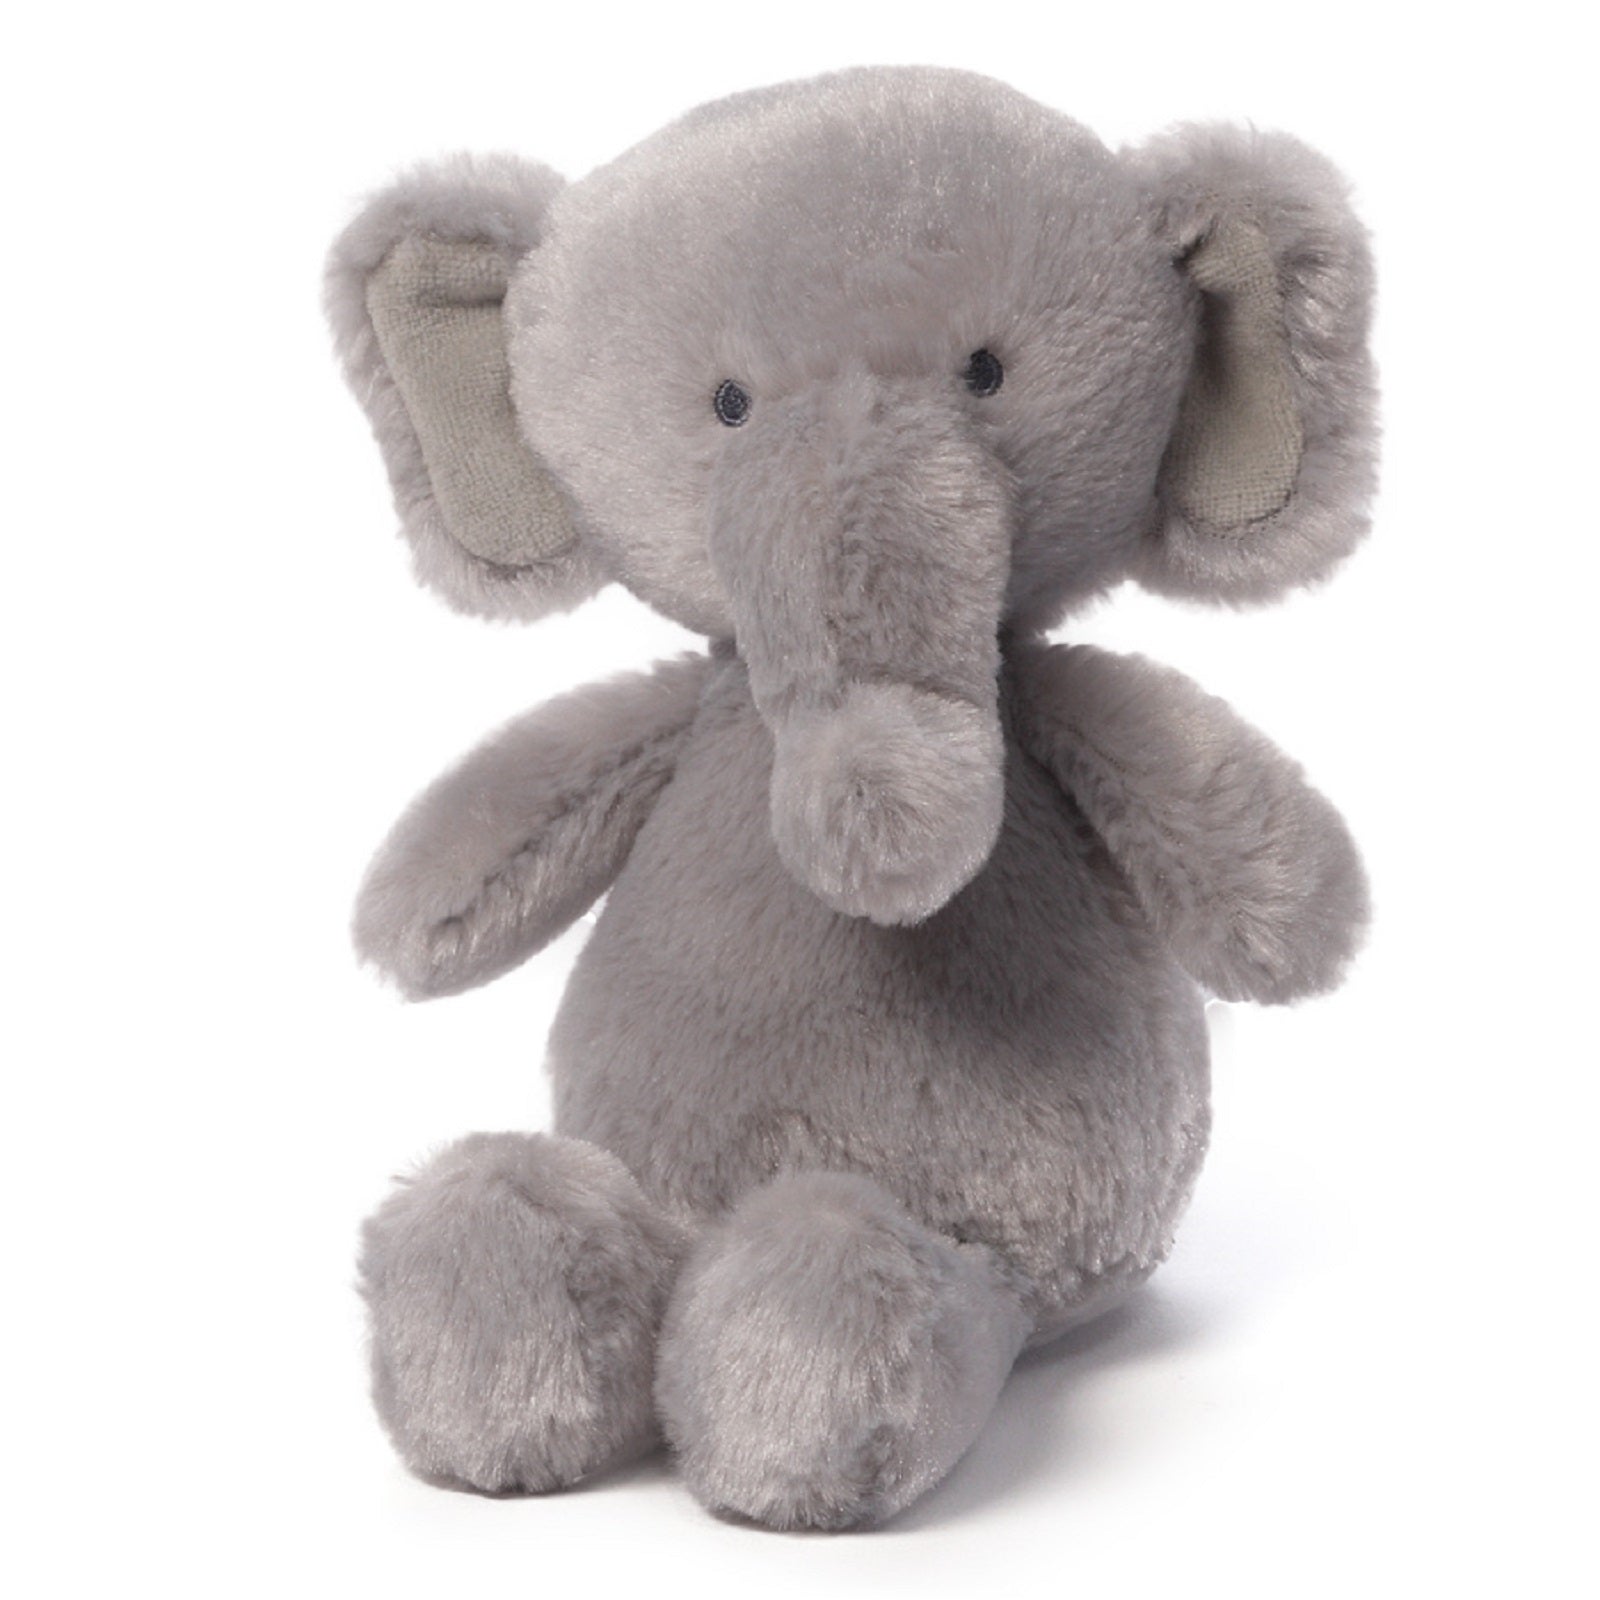 Baby Gund - Gradie Elephant Rattle - 5"